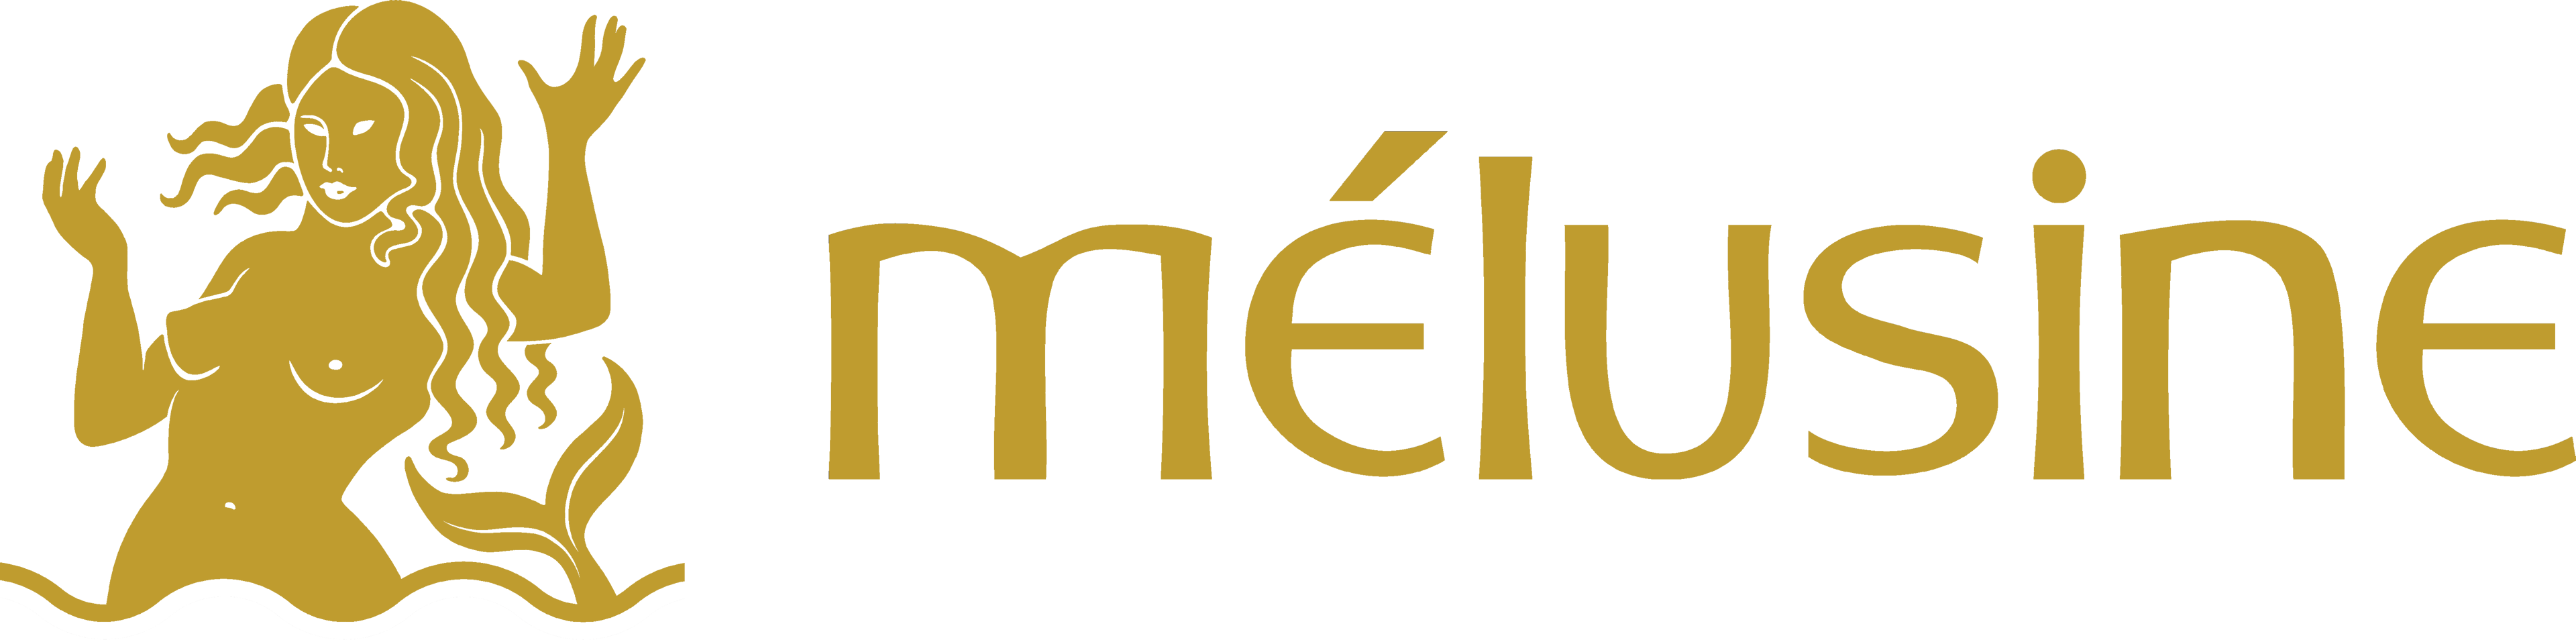 Mélusine logo